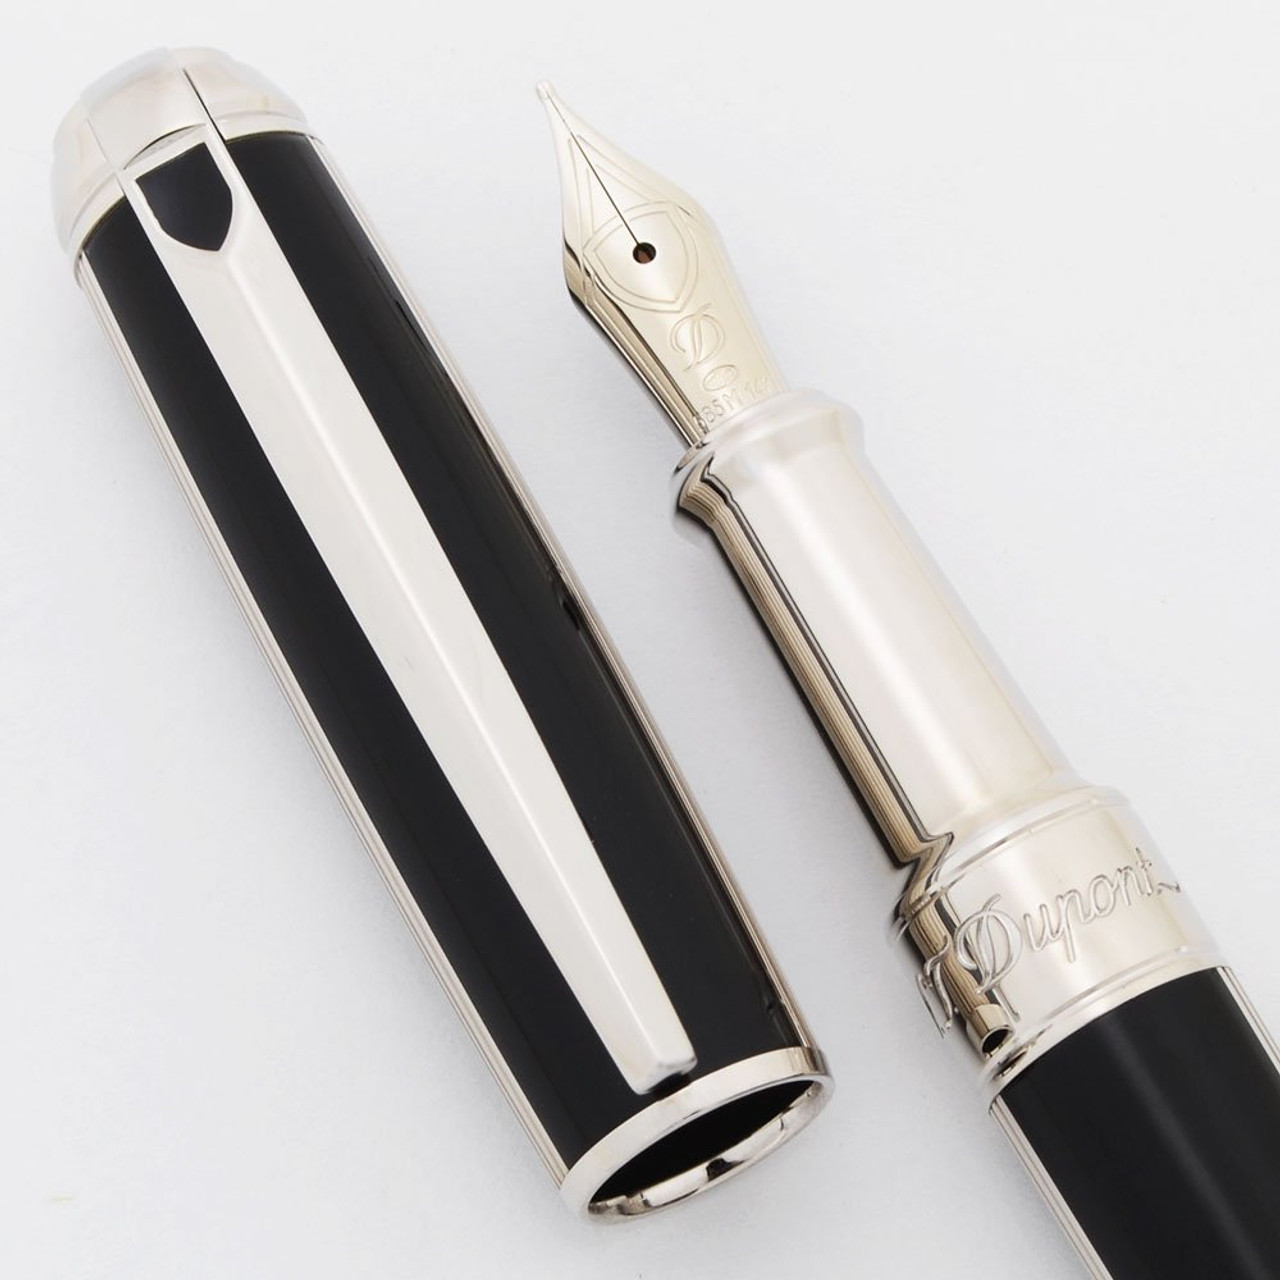 ST Dupont D-Line Windsor Fountain Pen - Palladium and Black, C/C, 14k Medium Nib (New in Box, Works Well)